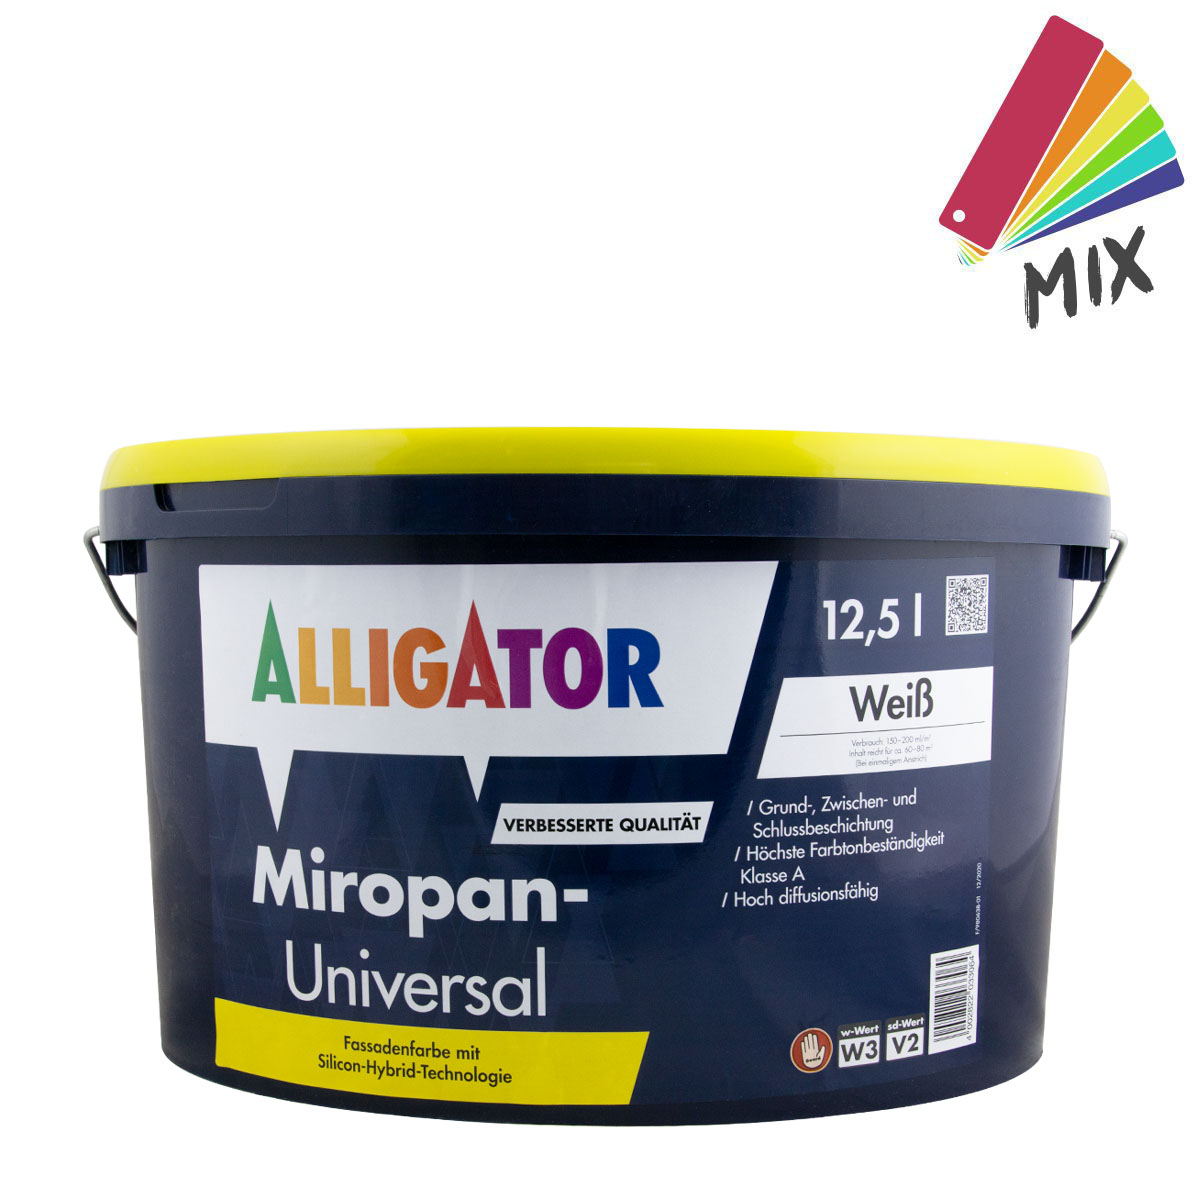 Alligator Miropan-Universal 12,5L MIX PG S Siliconharz-Fassadenfarbe